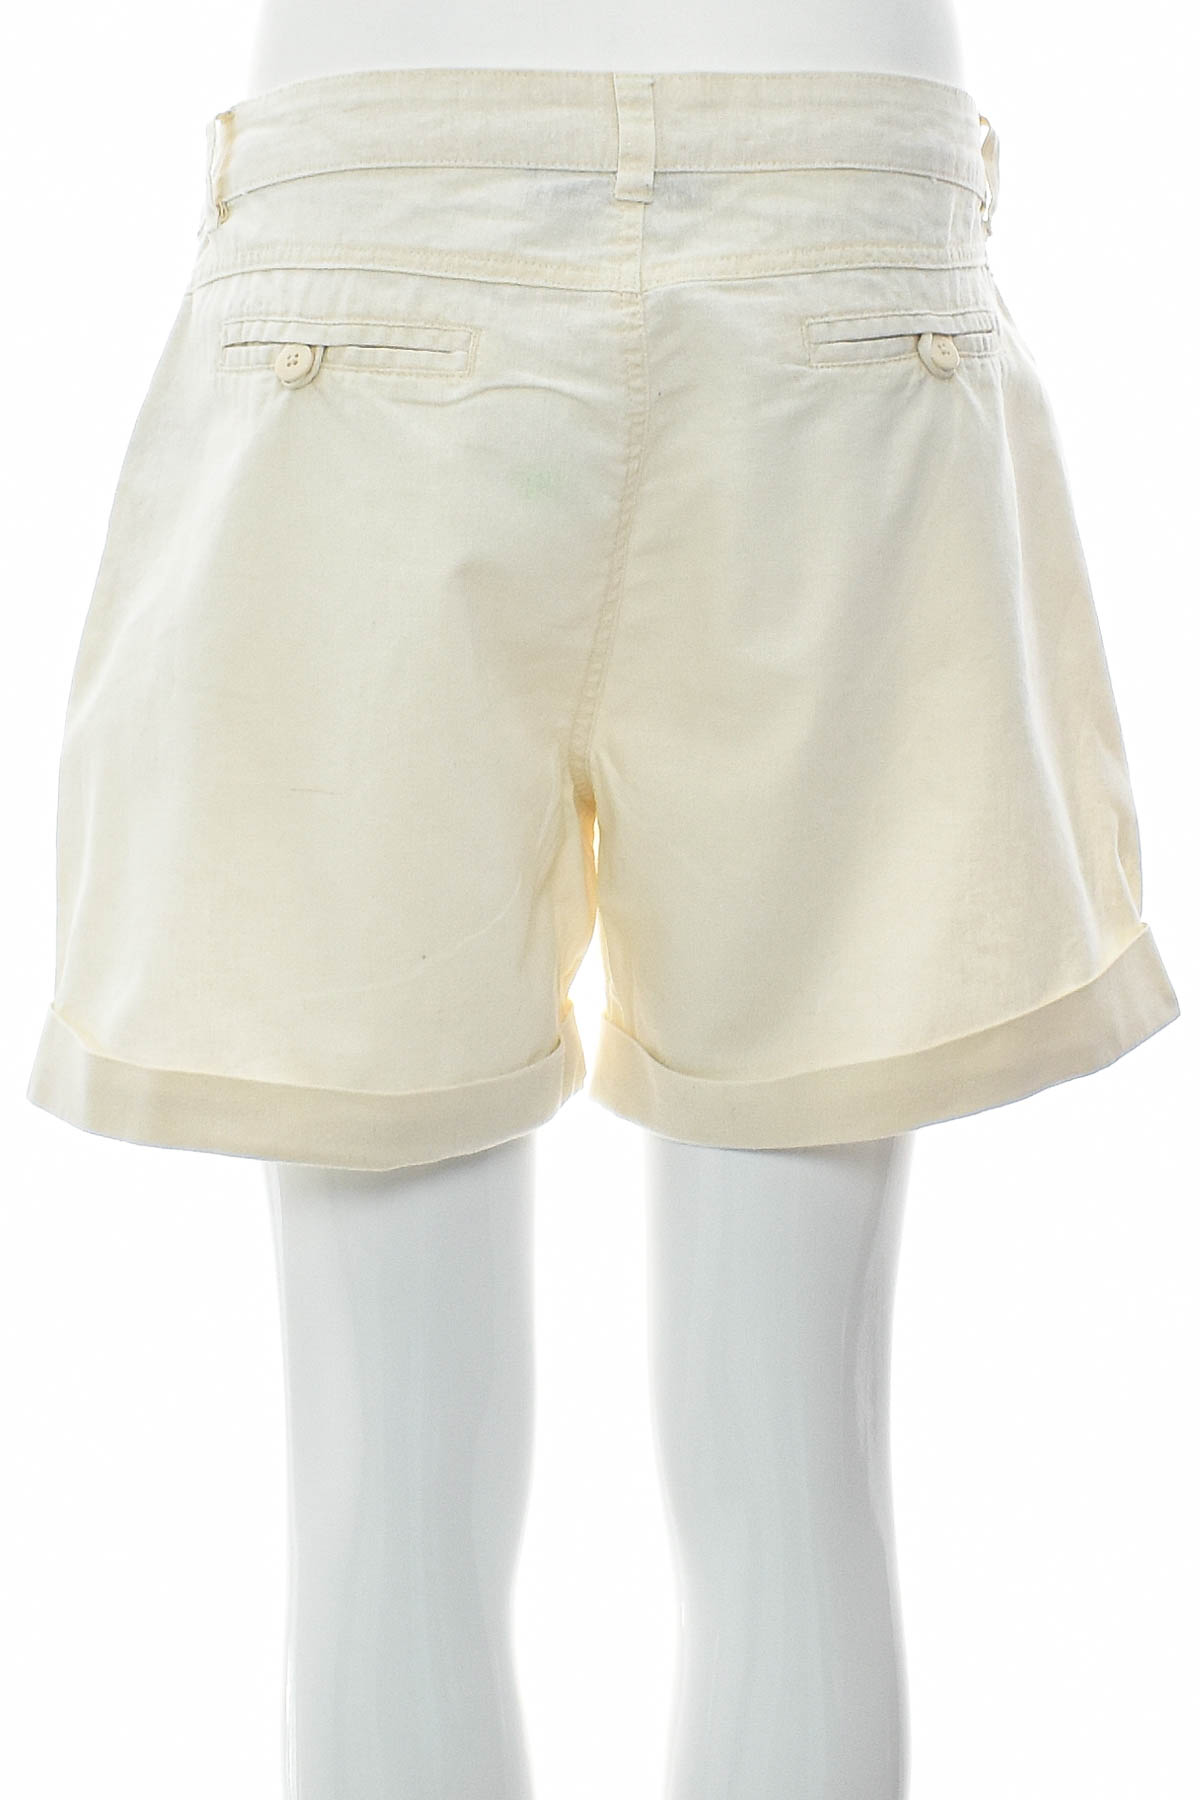 Female shorts - Esmara - 1